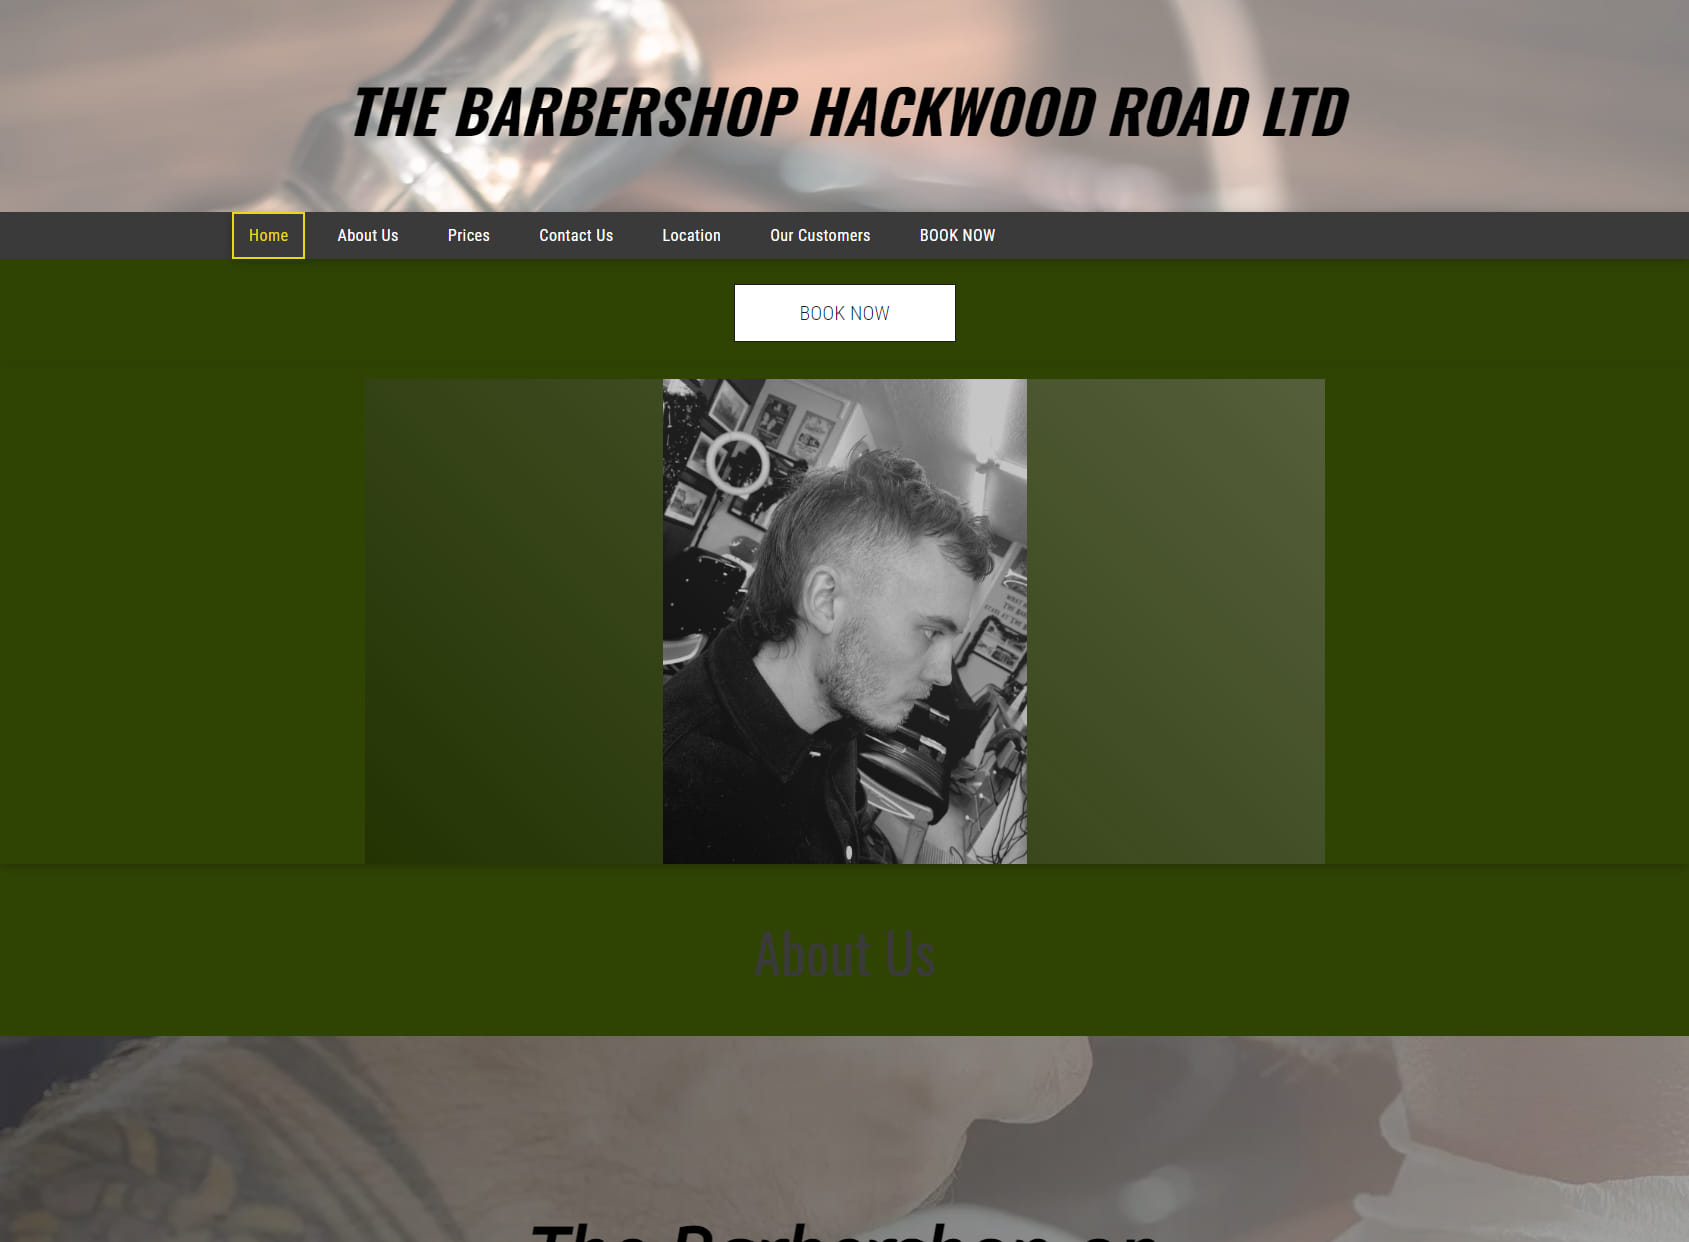 The Barbershop Hackwood Road ltd